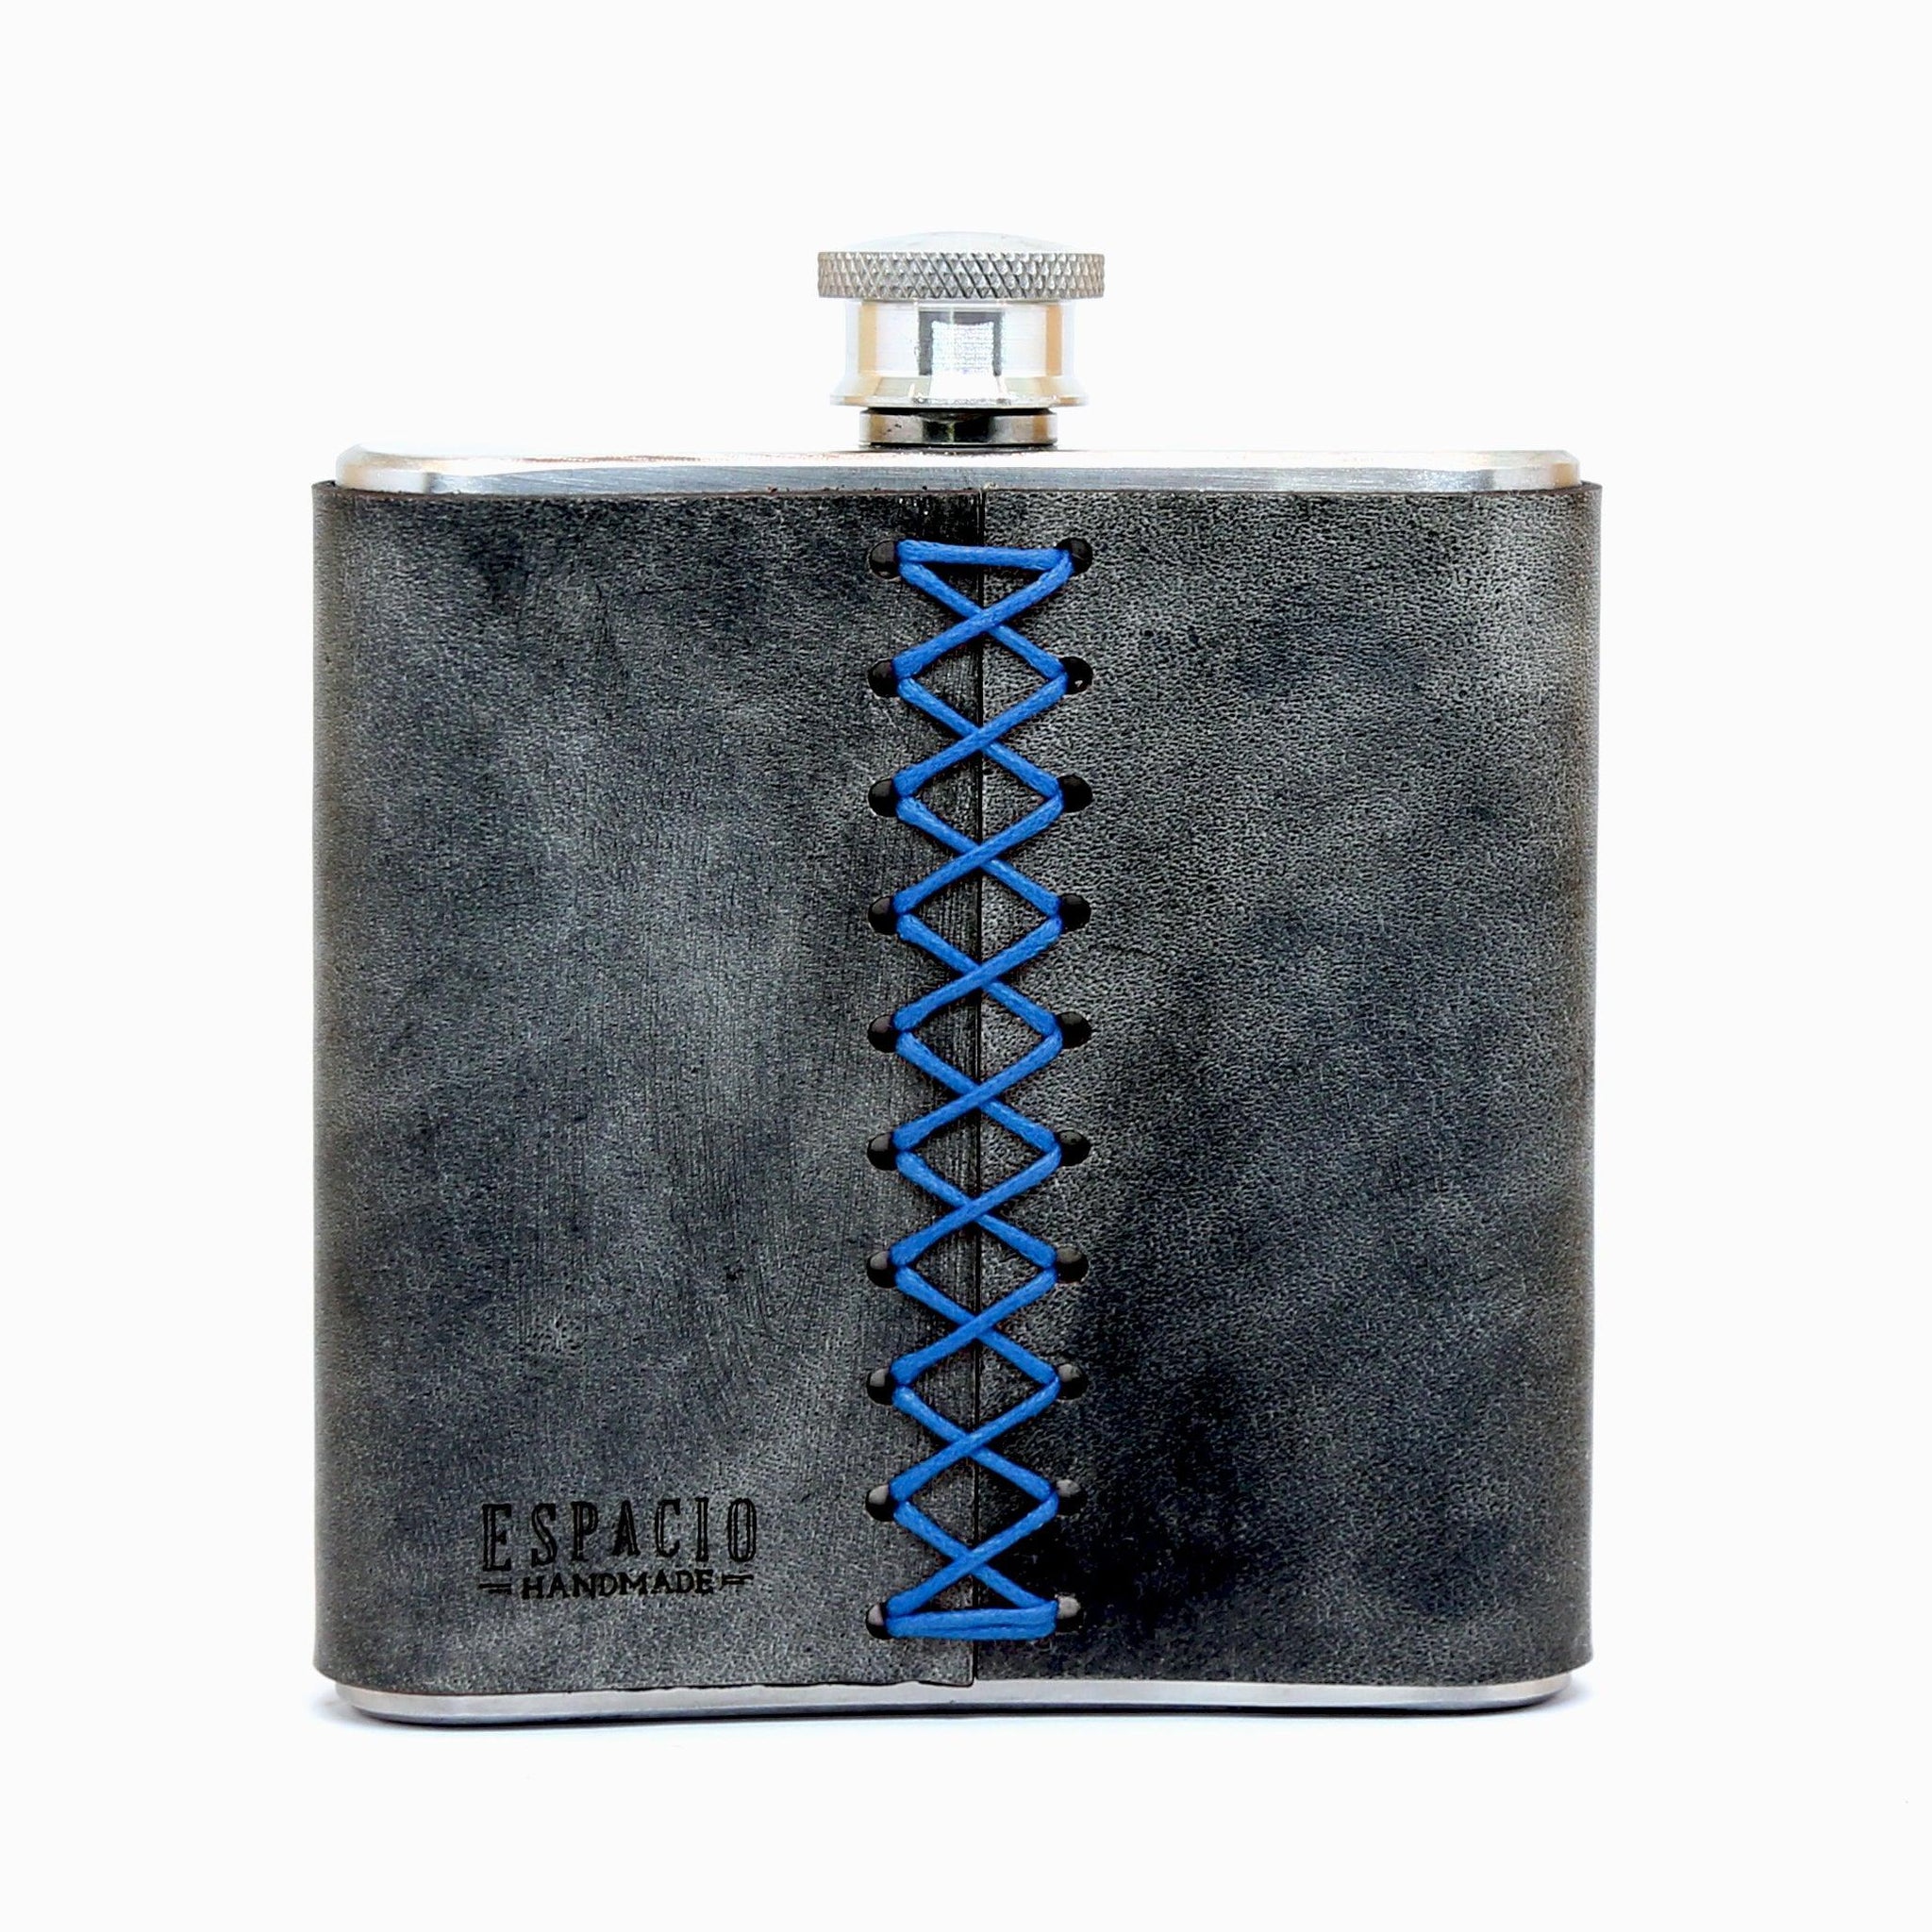 Personalized Engraved Leather Hip Flask - Espacio Handmade